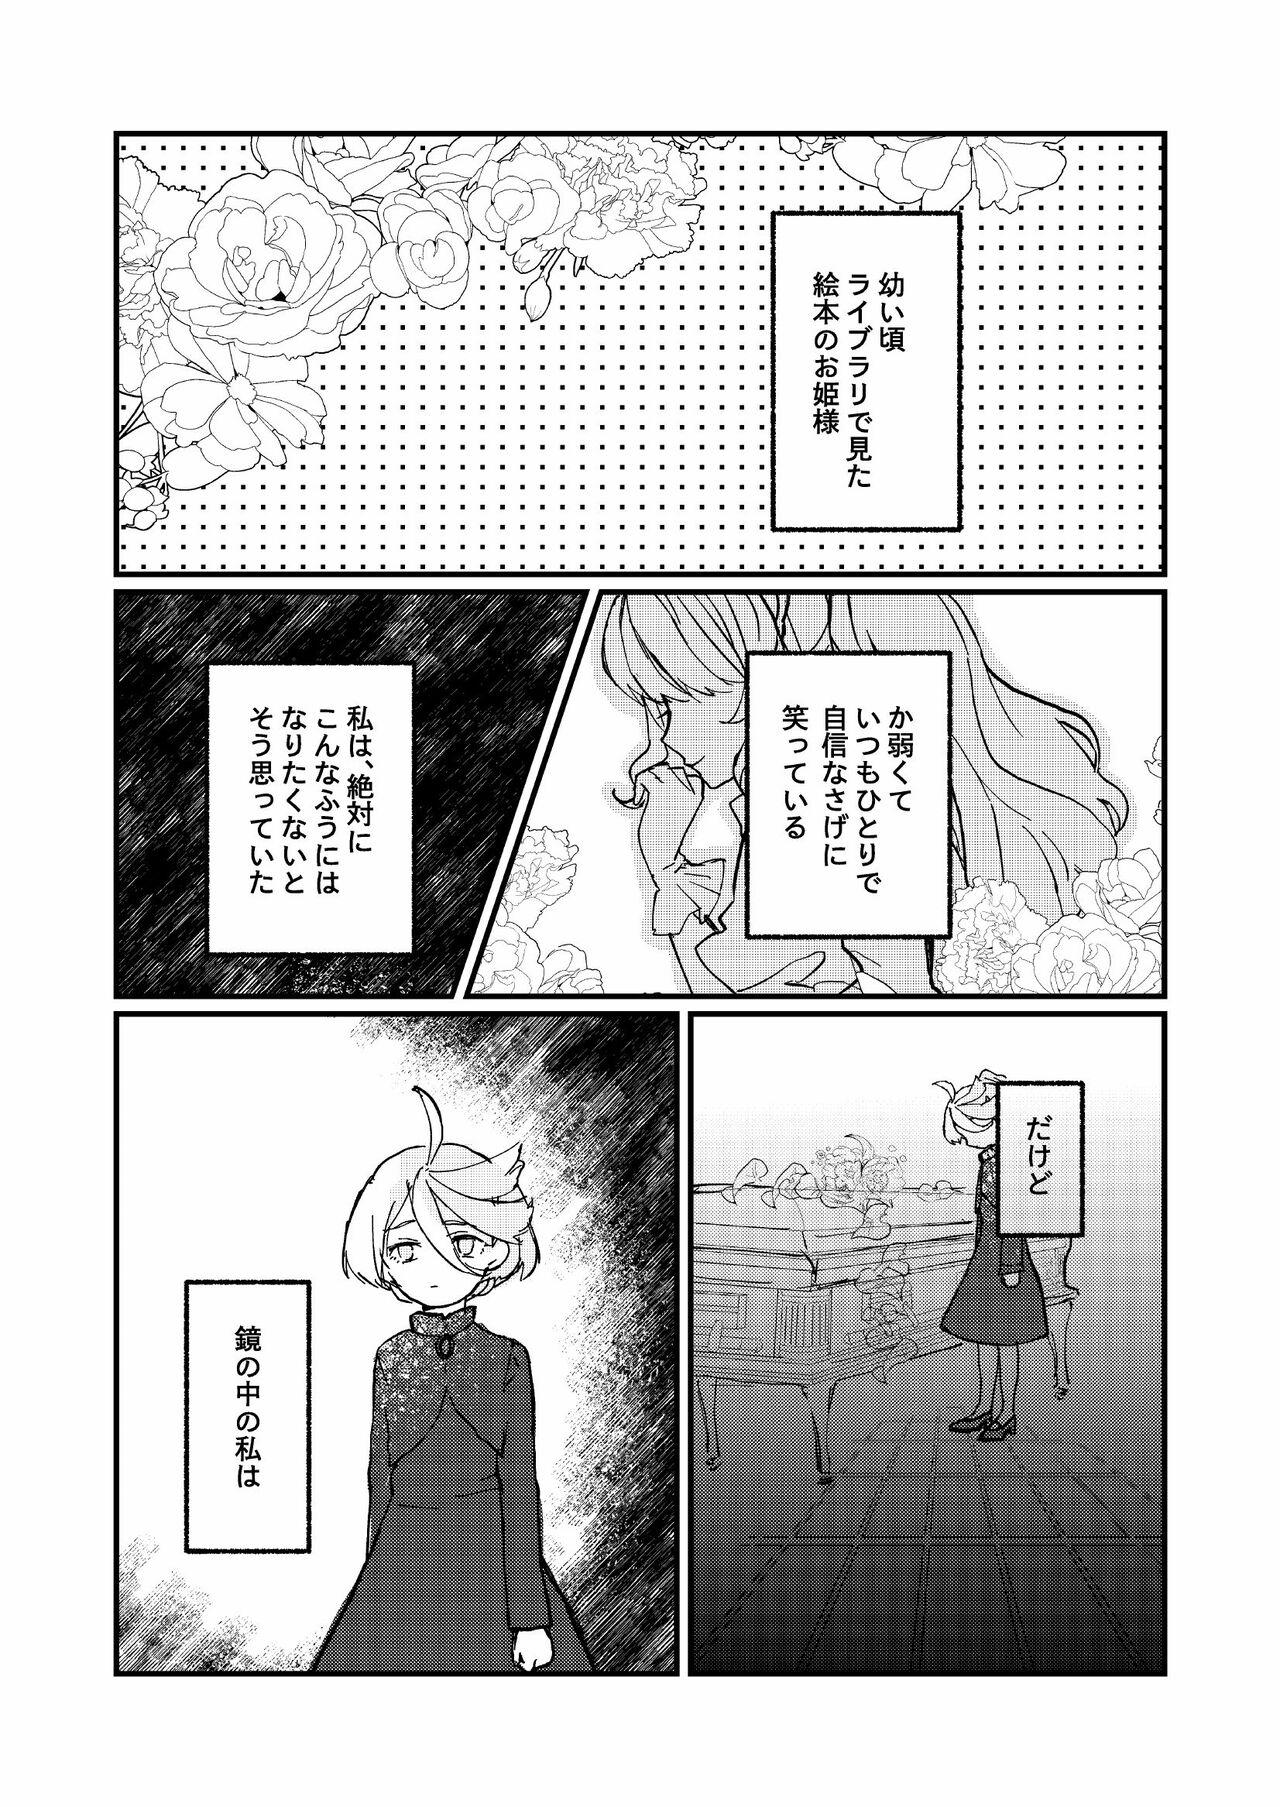 Kinky Mizu no Hoshi yori Ai o Komete - Mobile suit gundam the witch from mercury Pau - Page 2